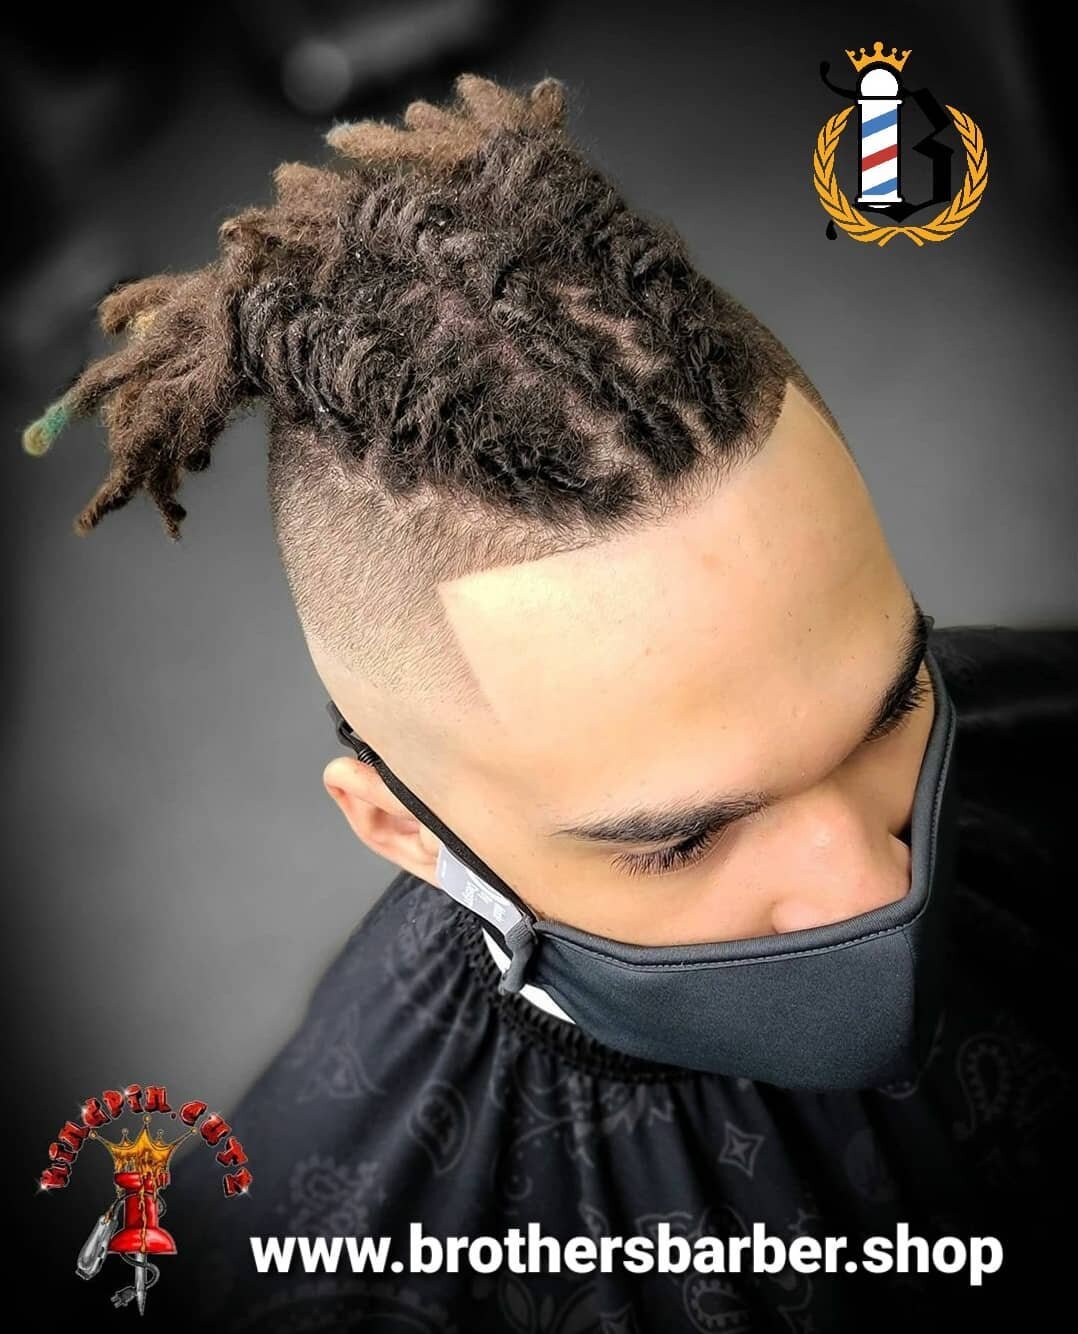 @kingpin.cutz Schedule your appointment online at WWW.BROTHERSBARBER.SHOP
click the link in bio
#billsmafia
#716
#buffalolove 
#gobills
#onebuffalo
#barber
#buffalonewyork
#buffalohair
#barbershop
#williamsvilleny
#barbershopconnect
#hairstyle
#cutof